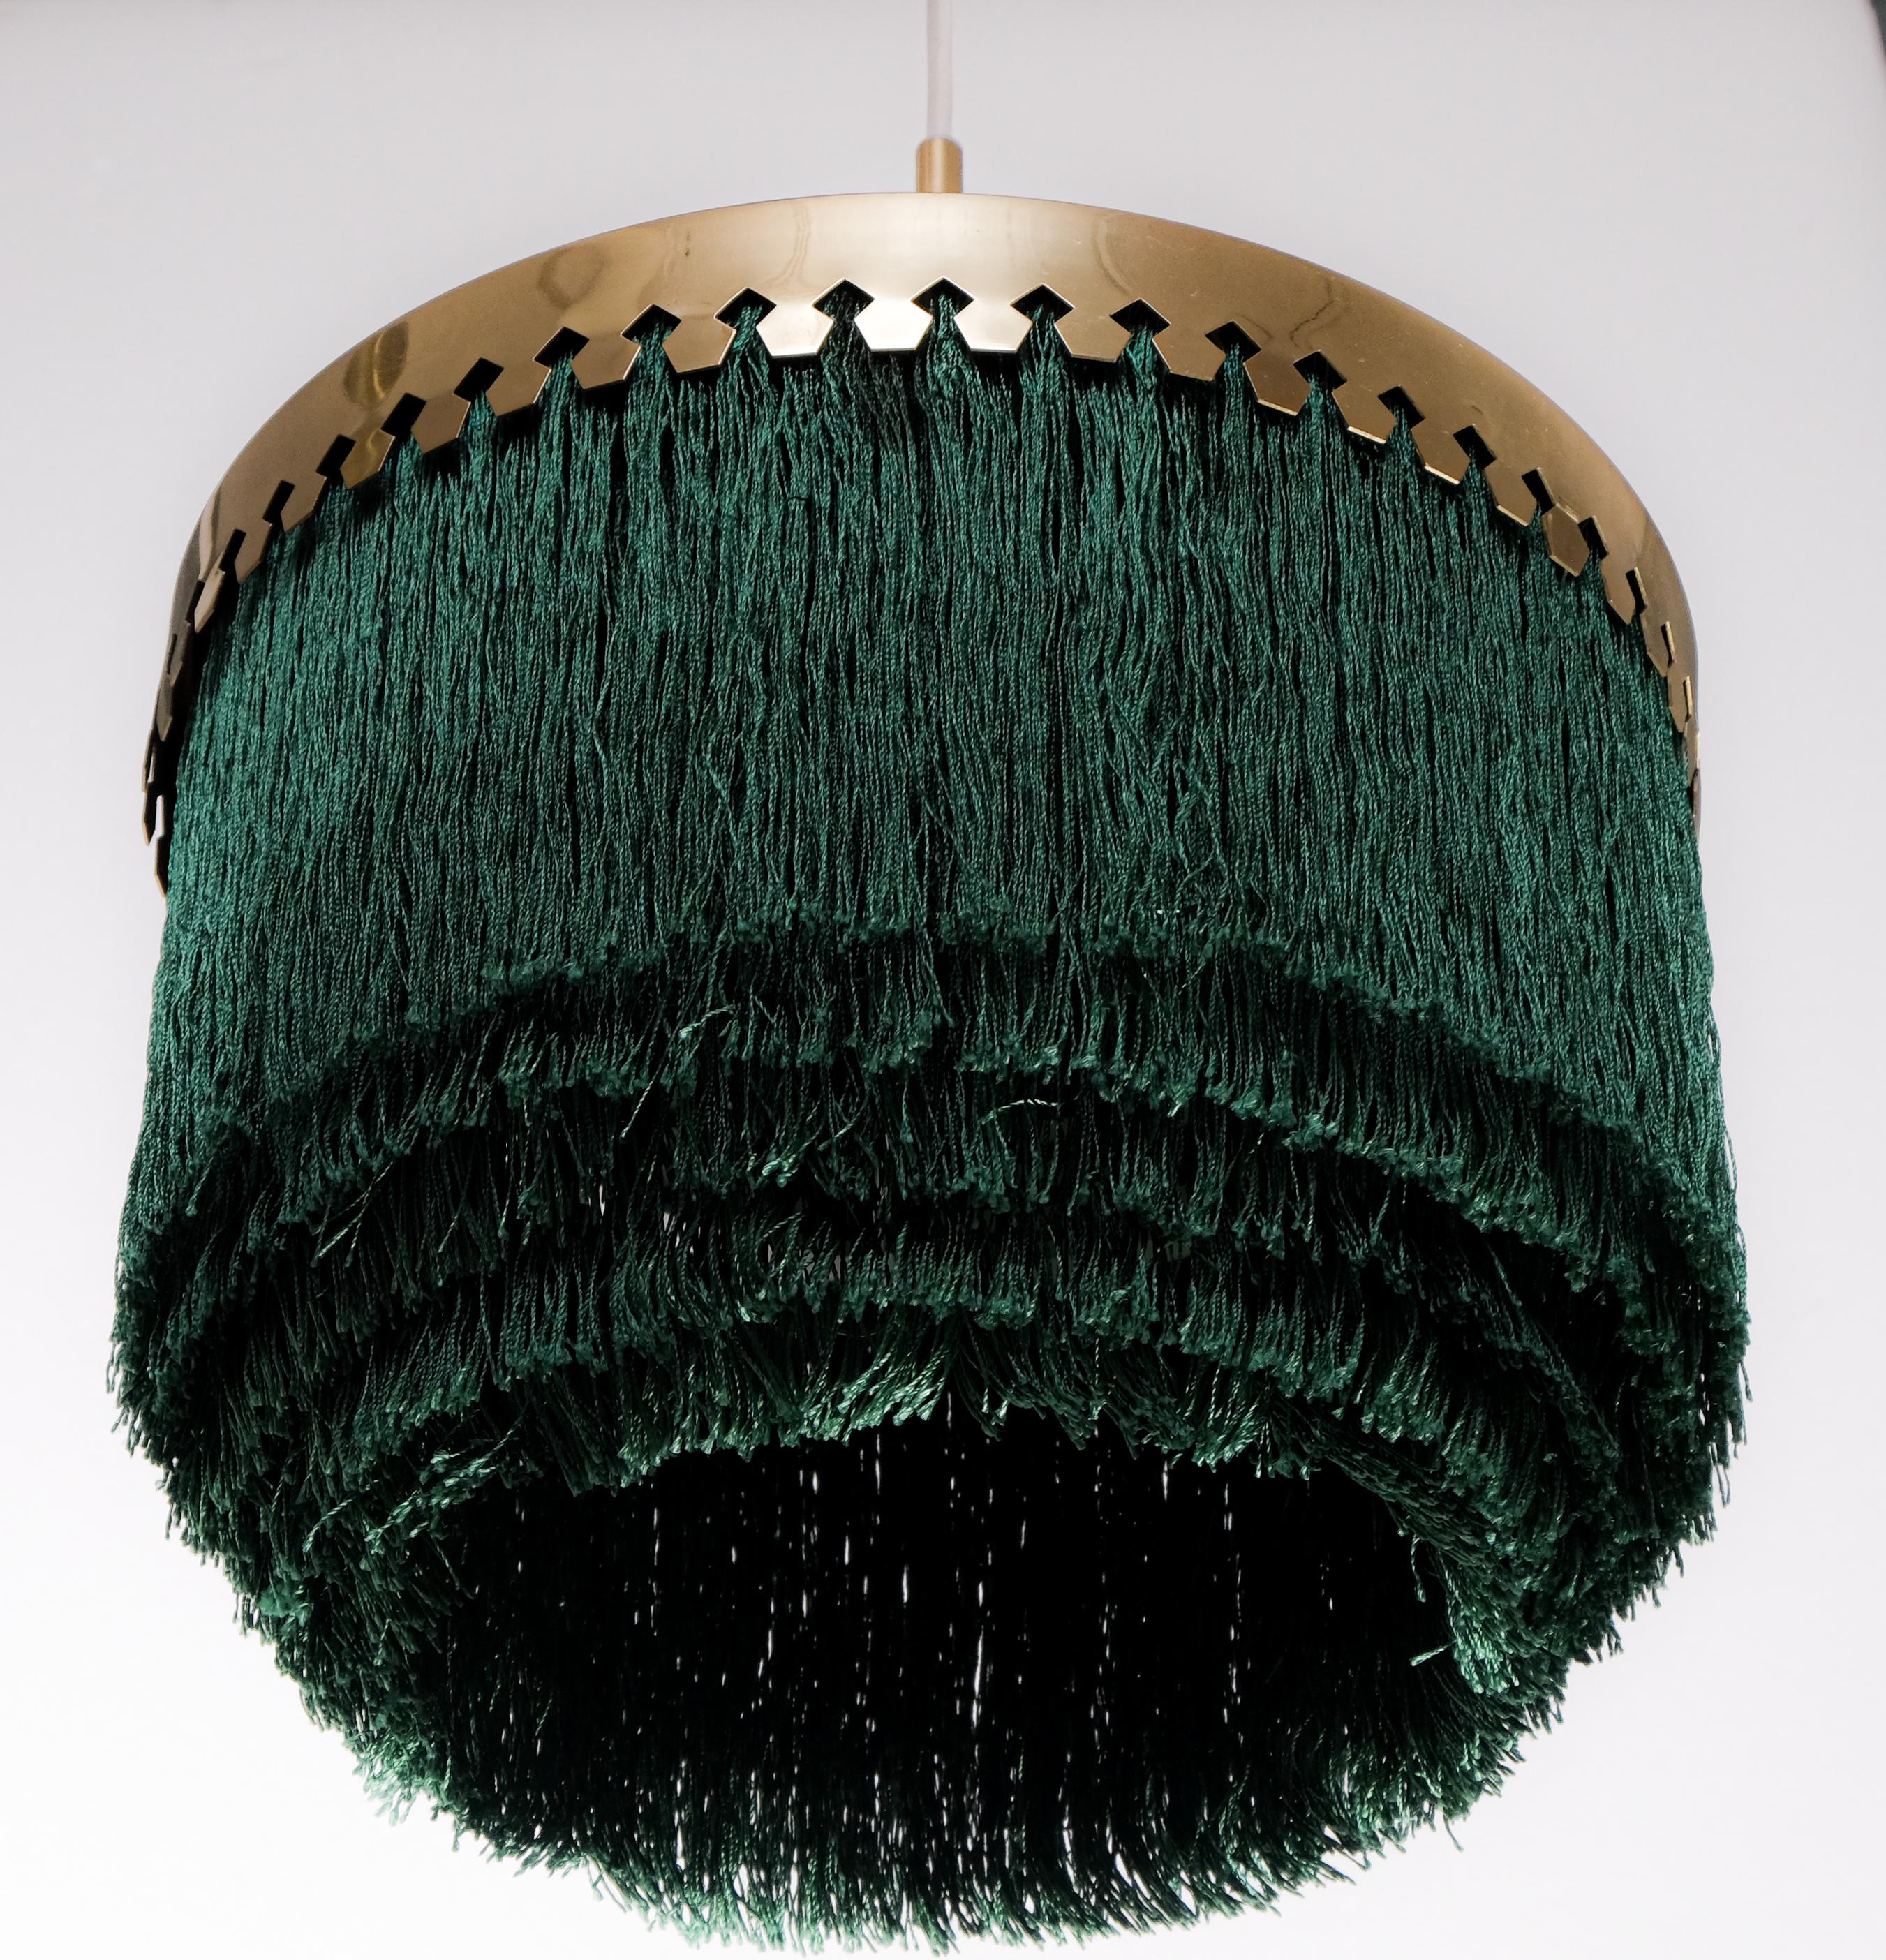 Brass and green silk fringes. Produced by Hans-Agne Jakobsson, Markaryd, Sweden, 1960s.
Measure: Diameter 28 cm.